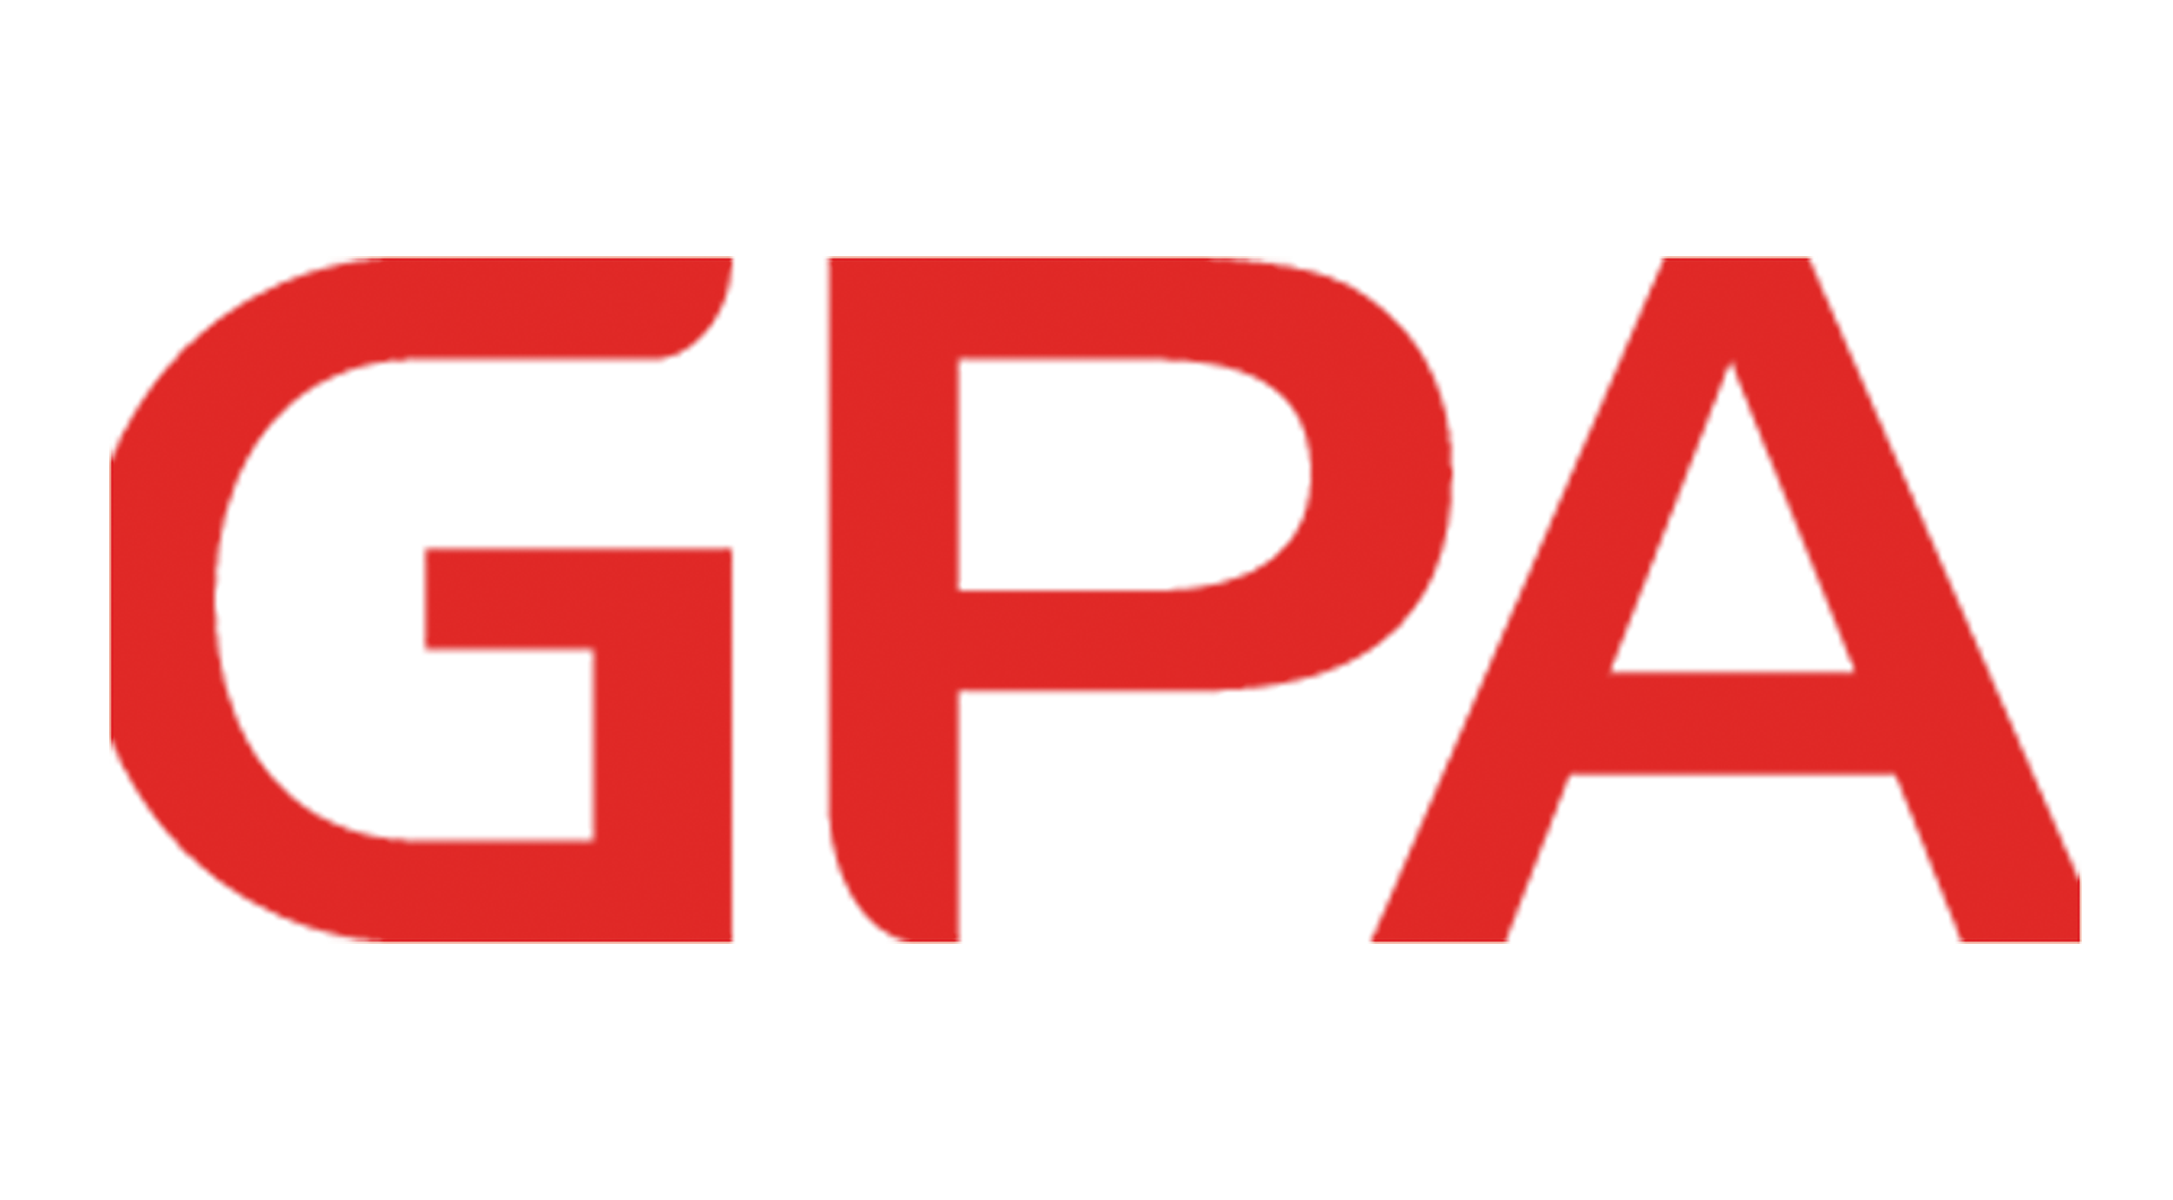 GPA Engineering logo